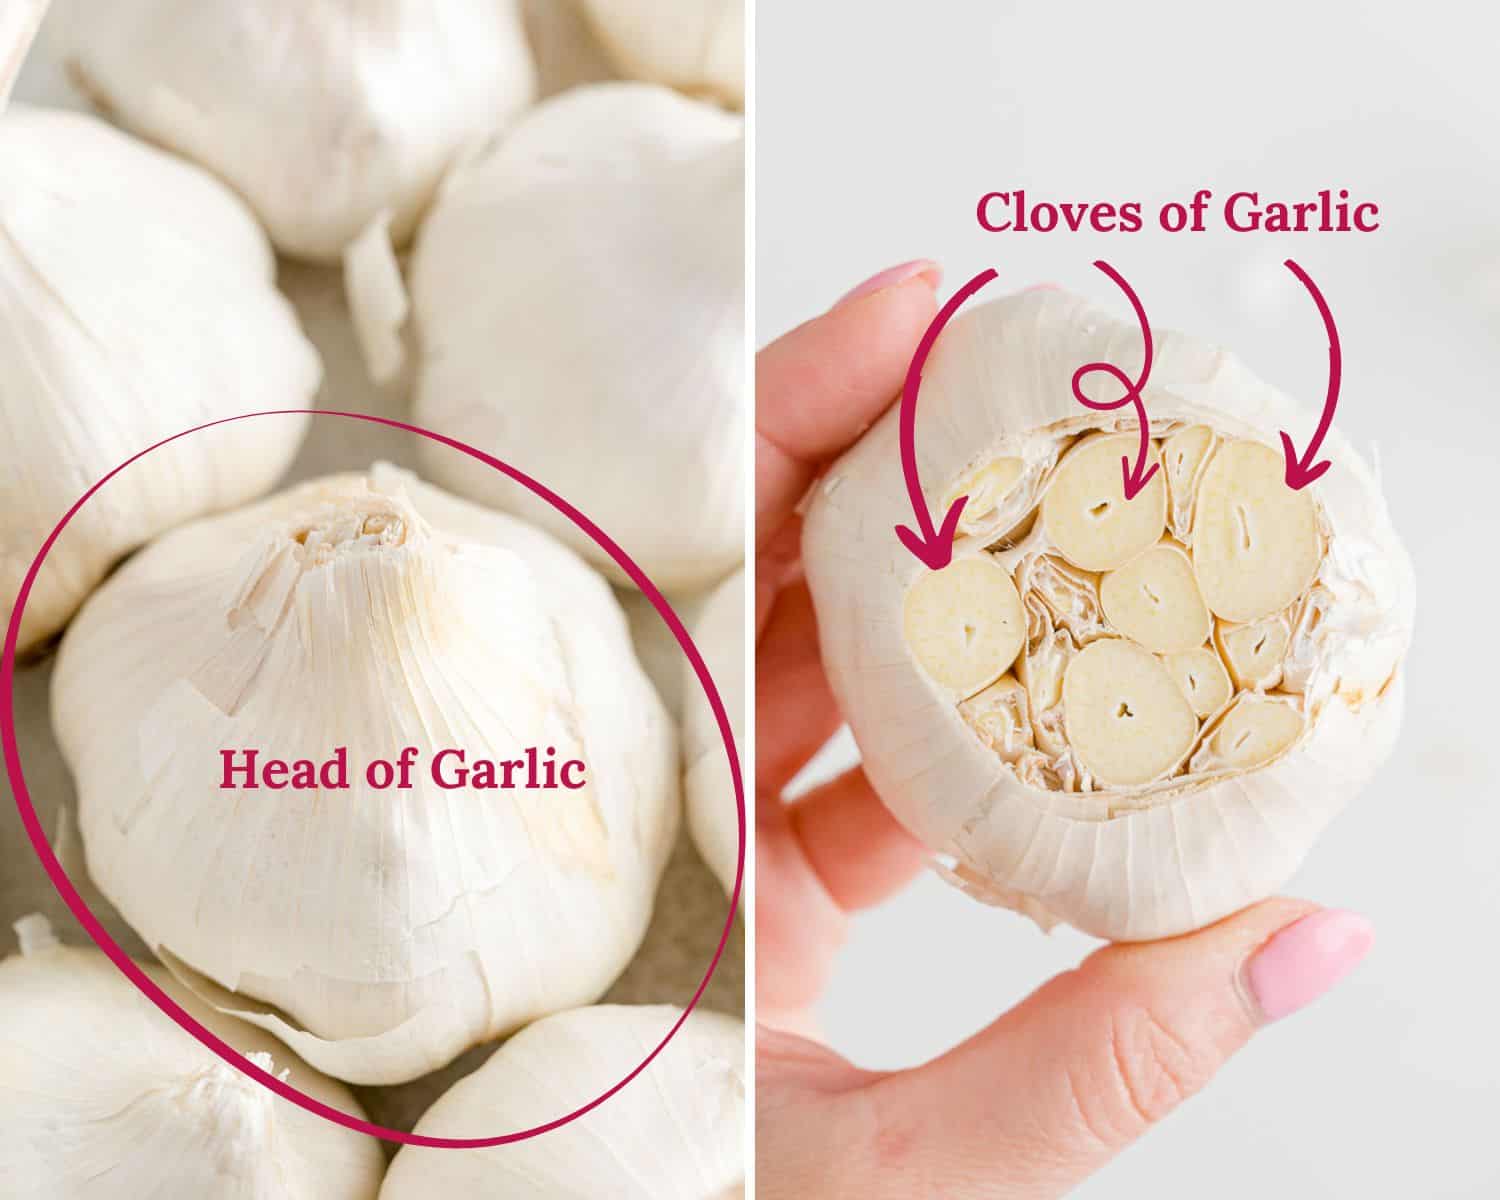 Head vs cloves of garlic, labeled.